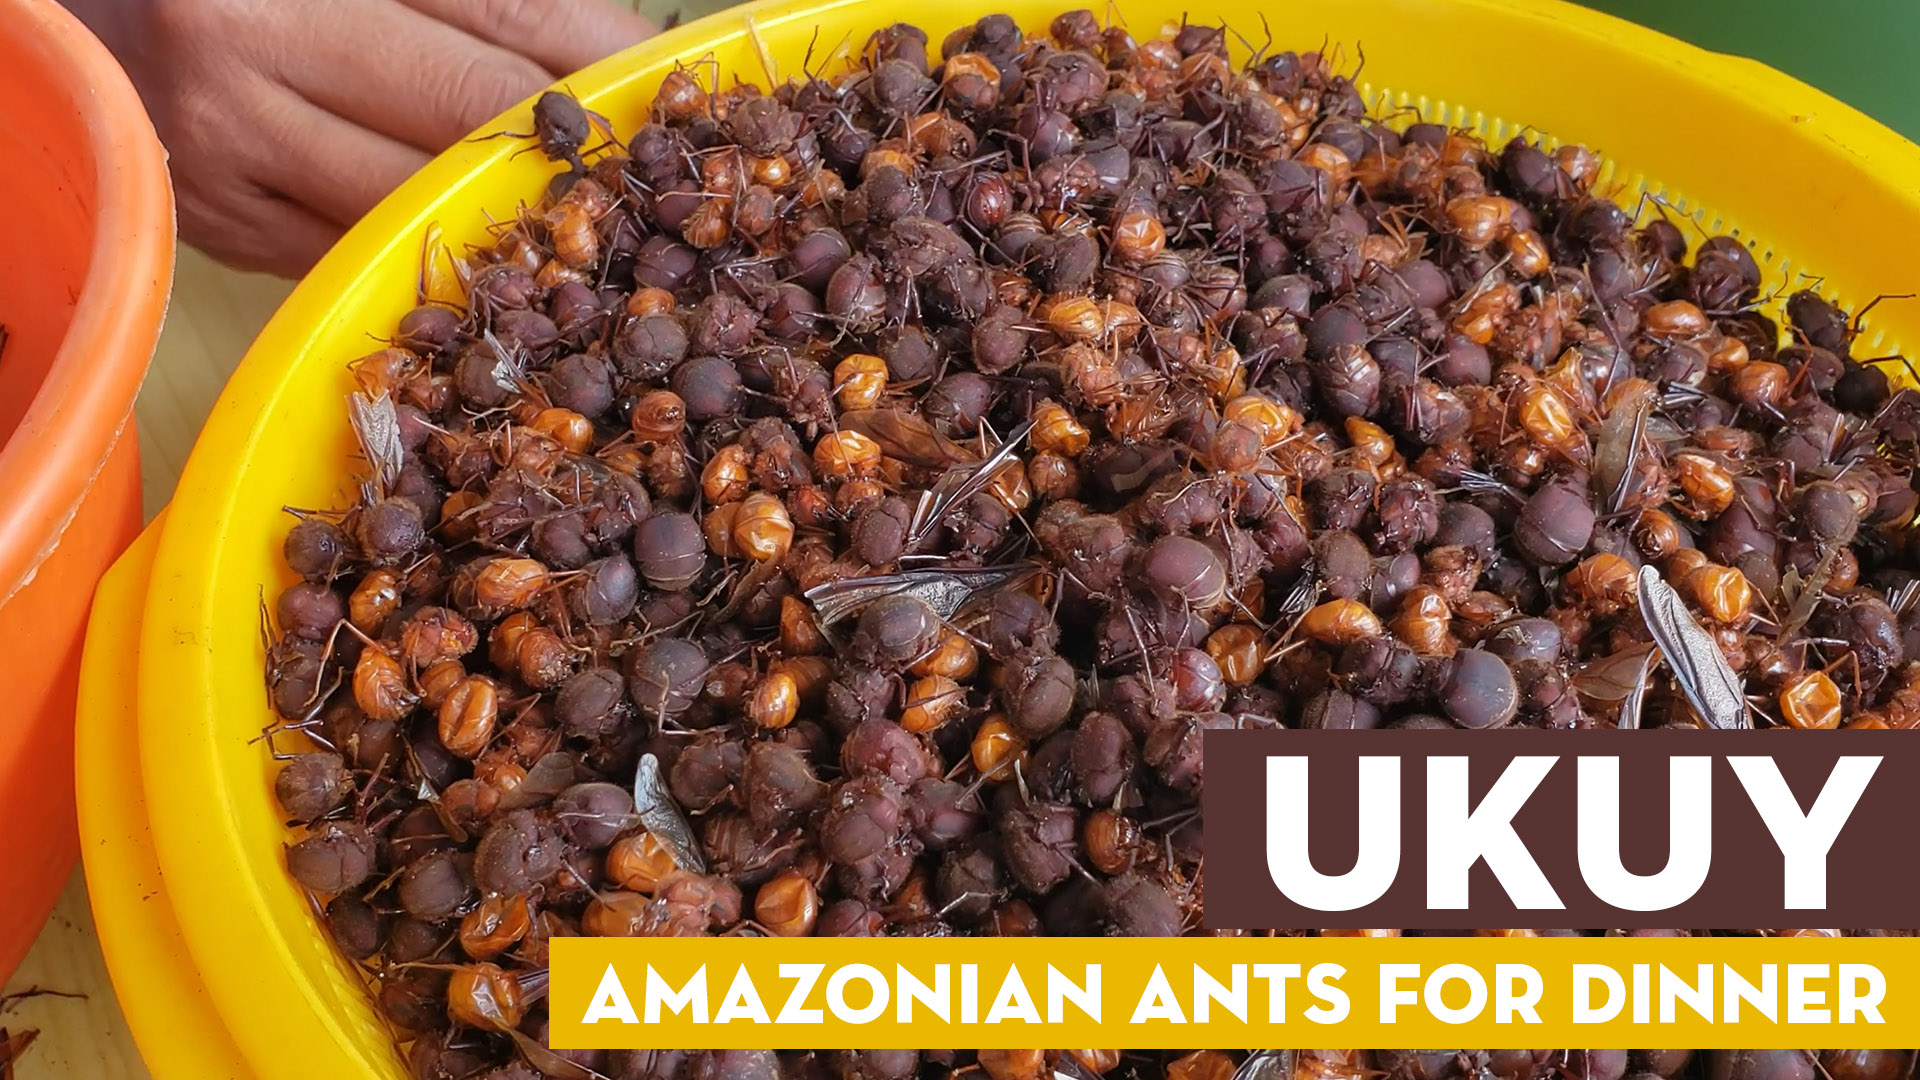 Ukuy: Amazonian Ants For Dinner